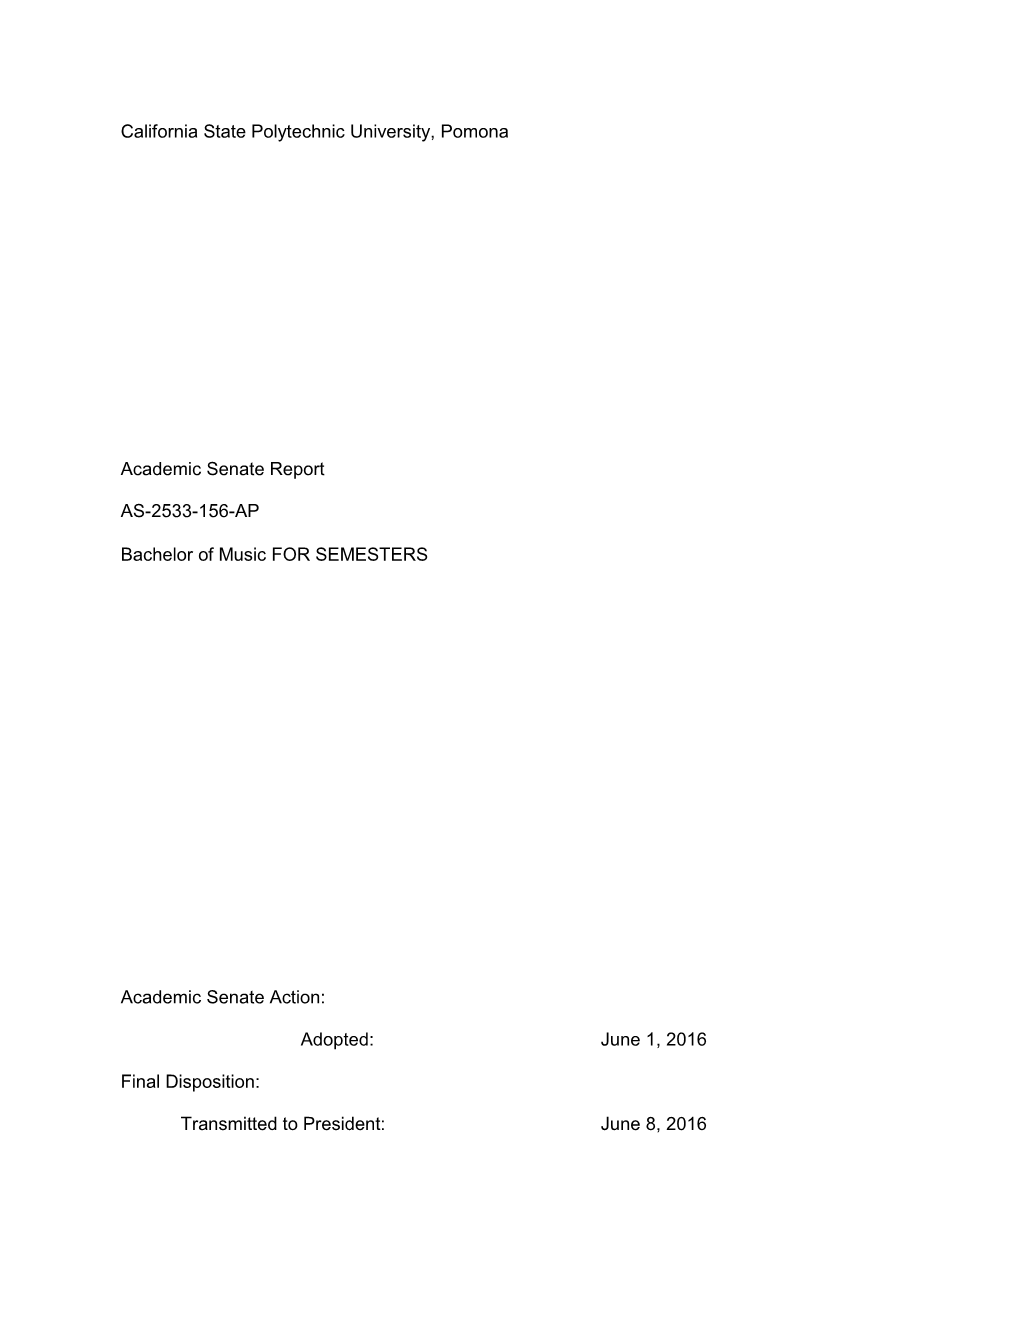 California State Polytechnic University, Pomona Academic Senate Report